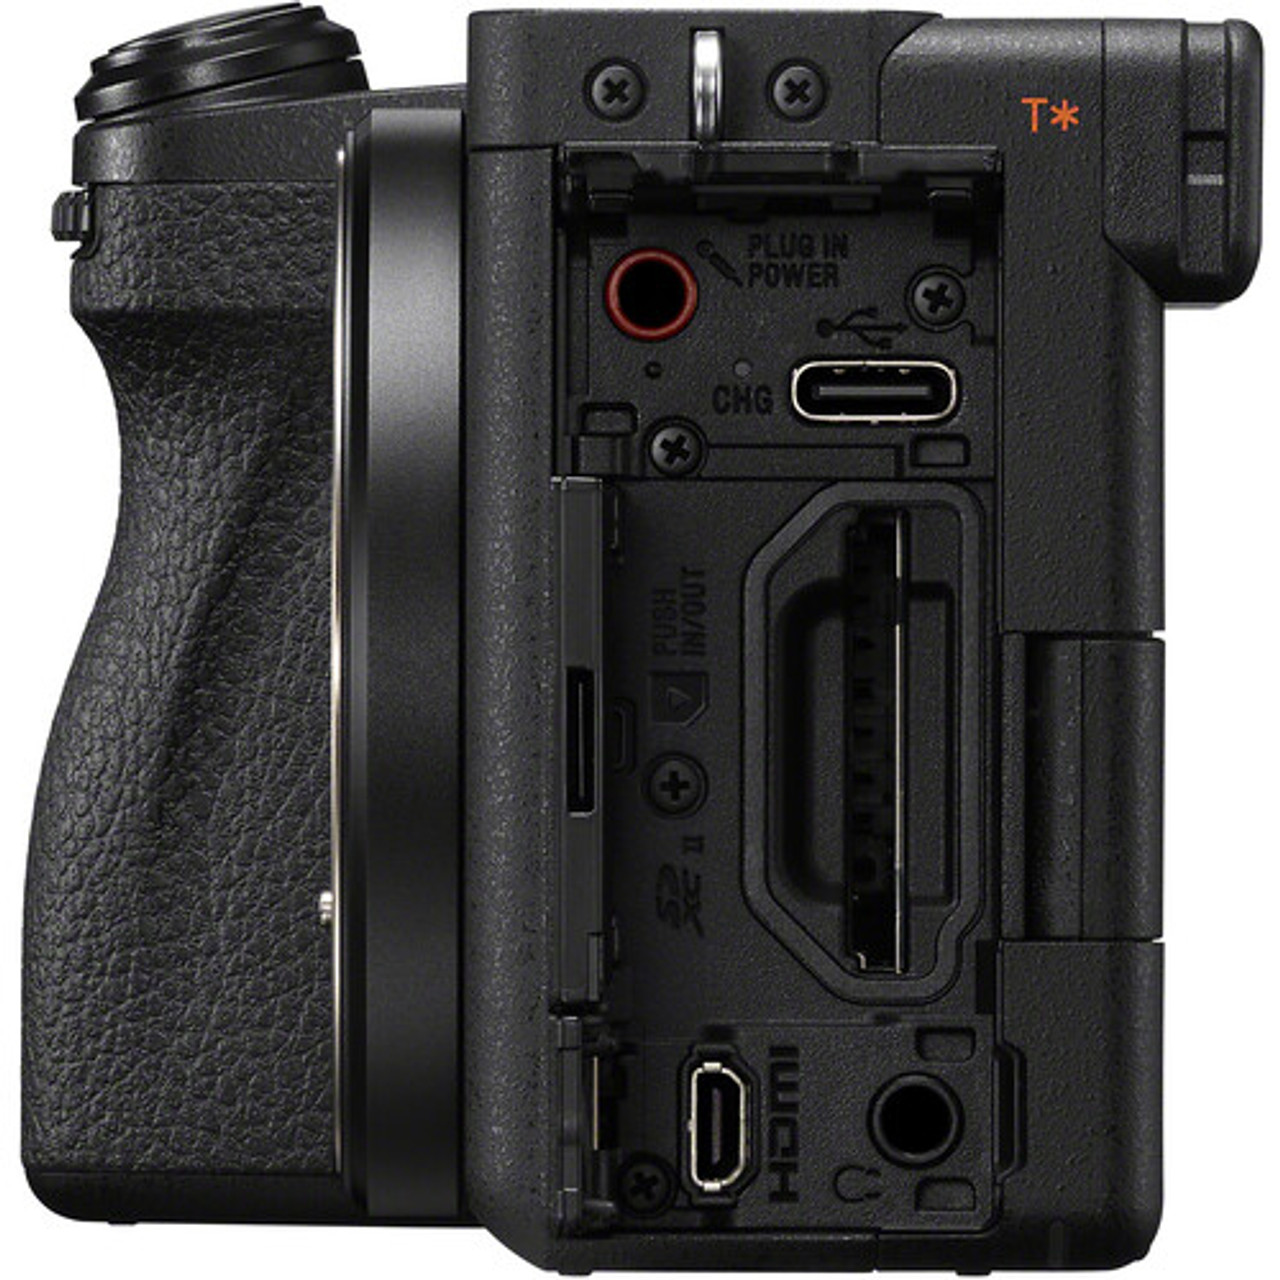 Sony Alpha 6700 Mirrorless Camera w/ 18-135mm Lens 27242926226